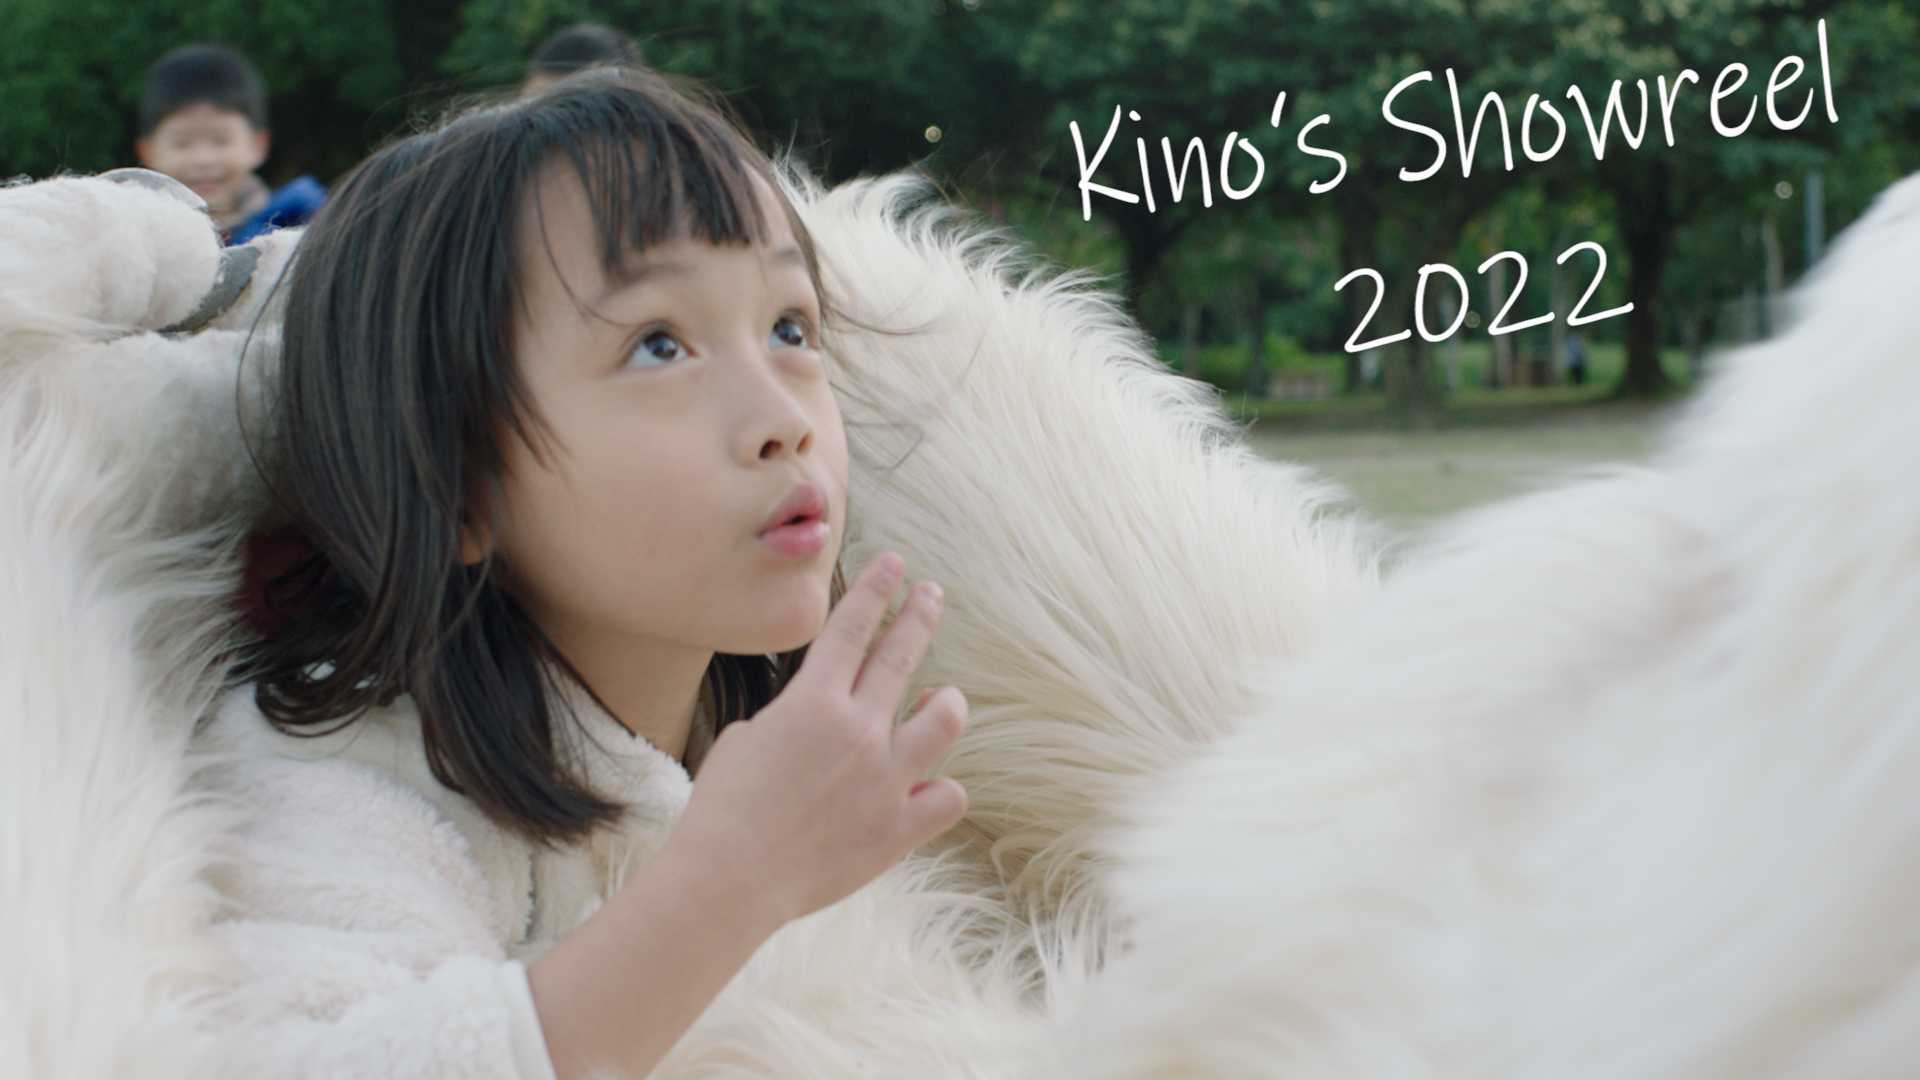 Kino's Showreel 2022